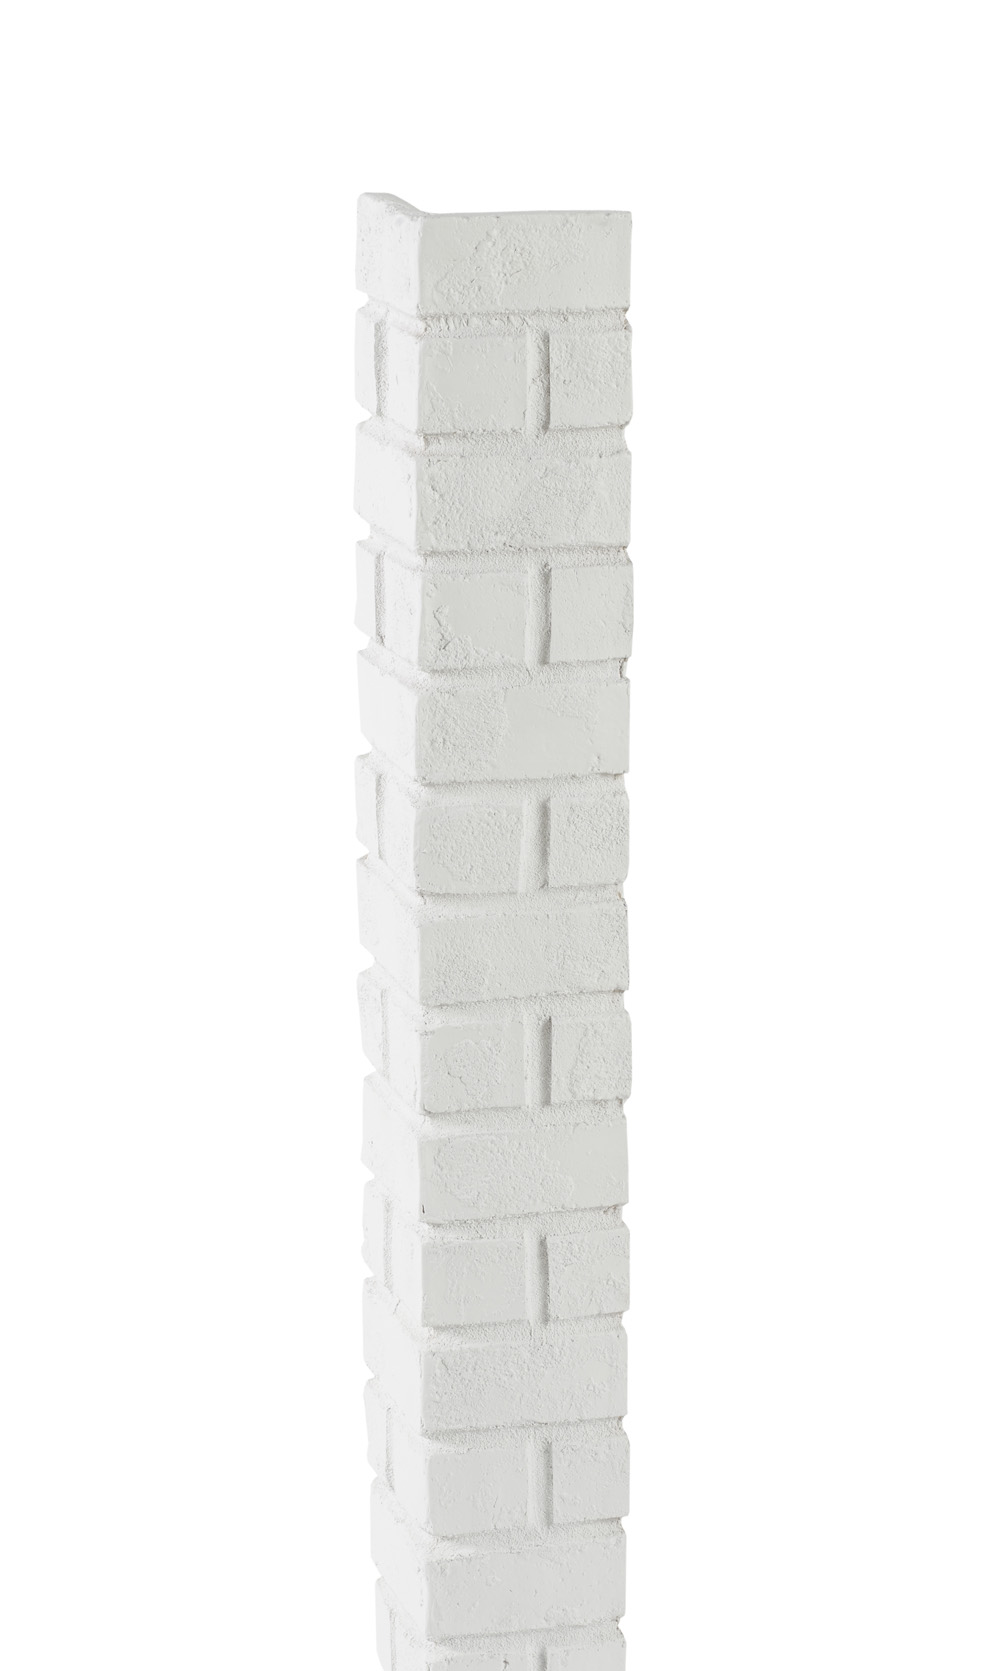 Brick Rustic Corner - White